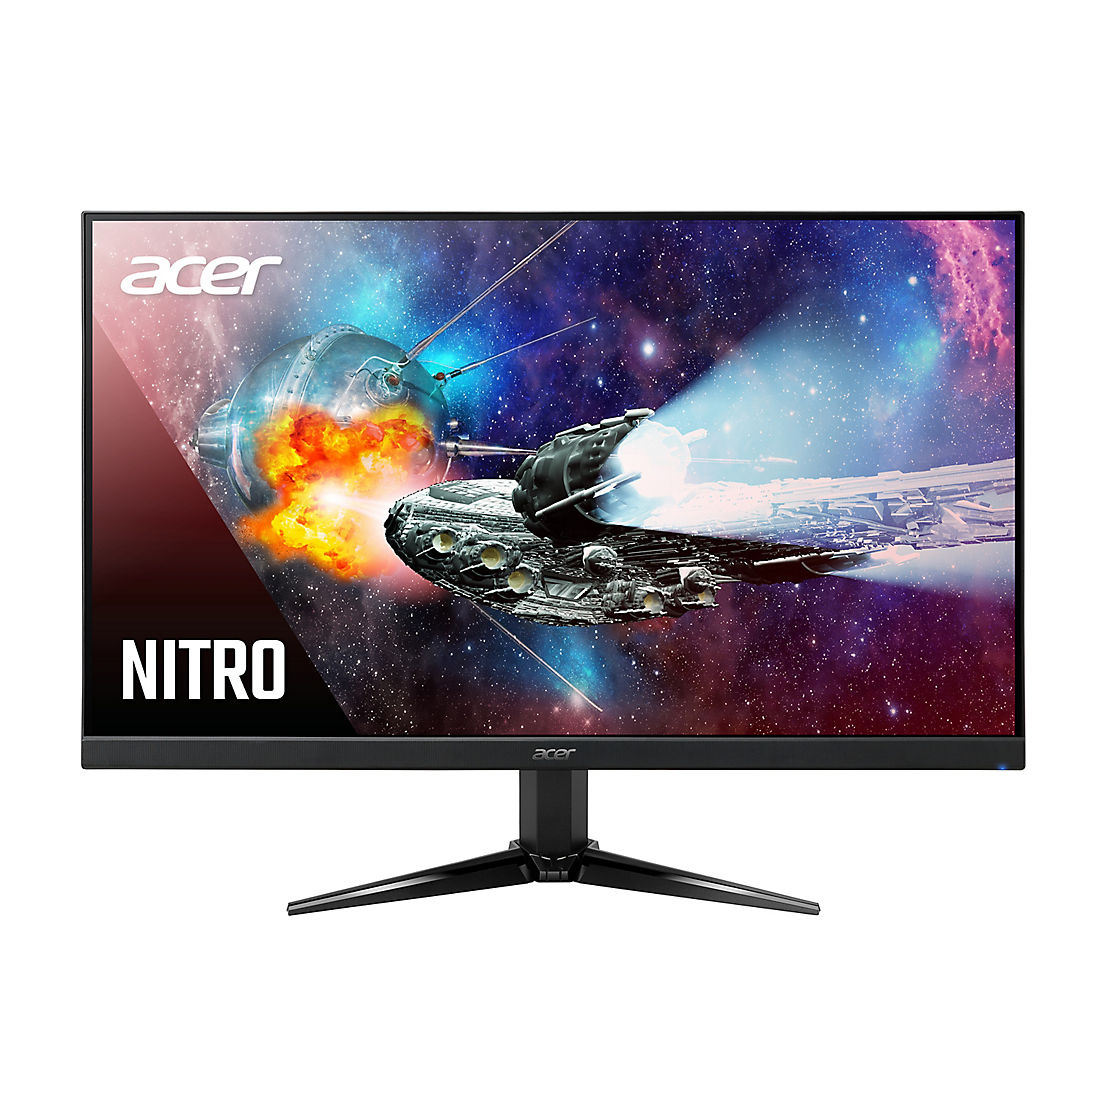 Acer Nitro QG271 27